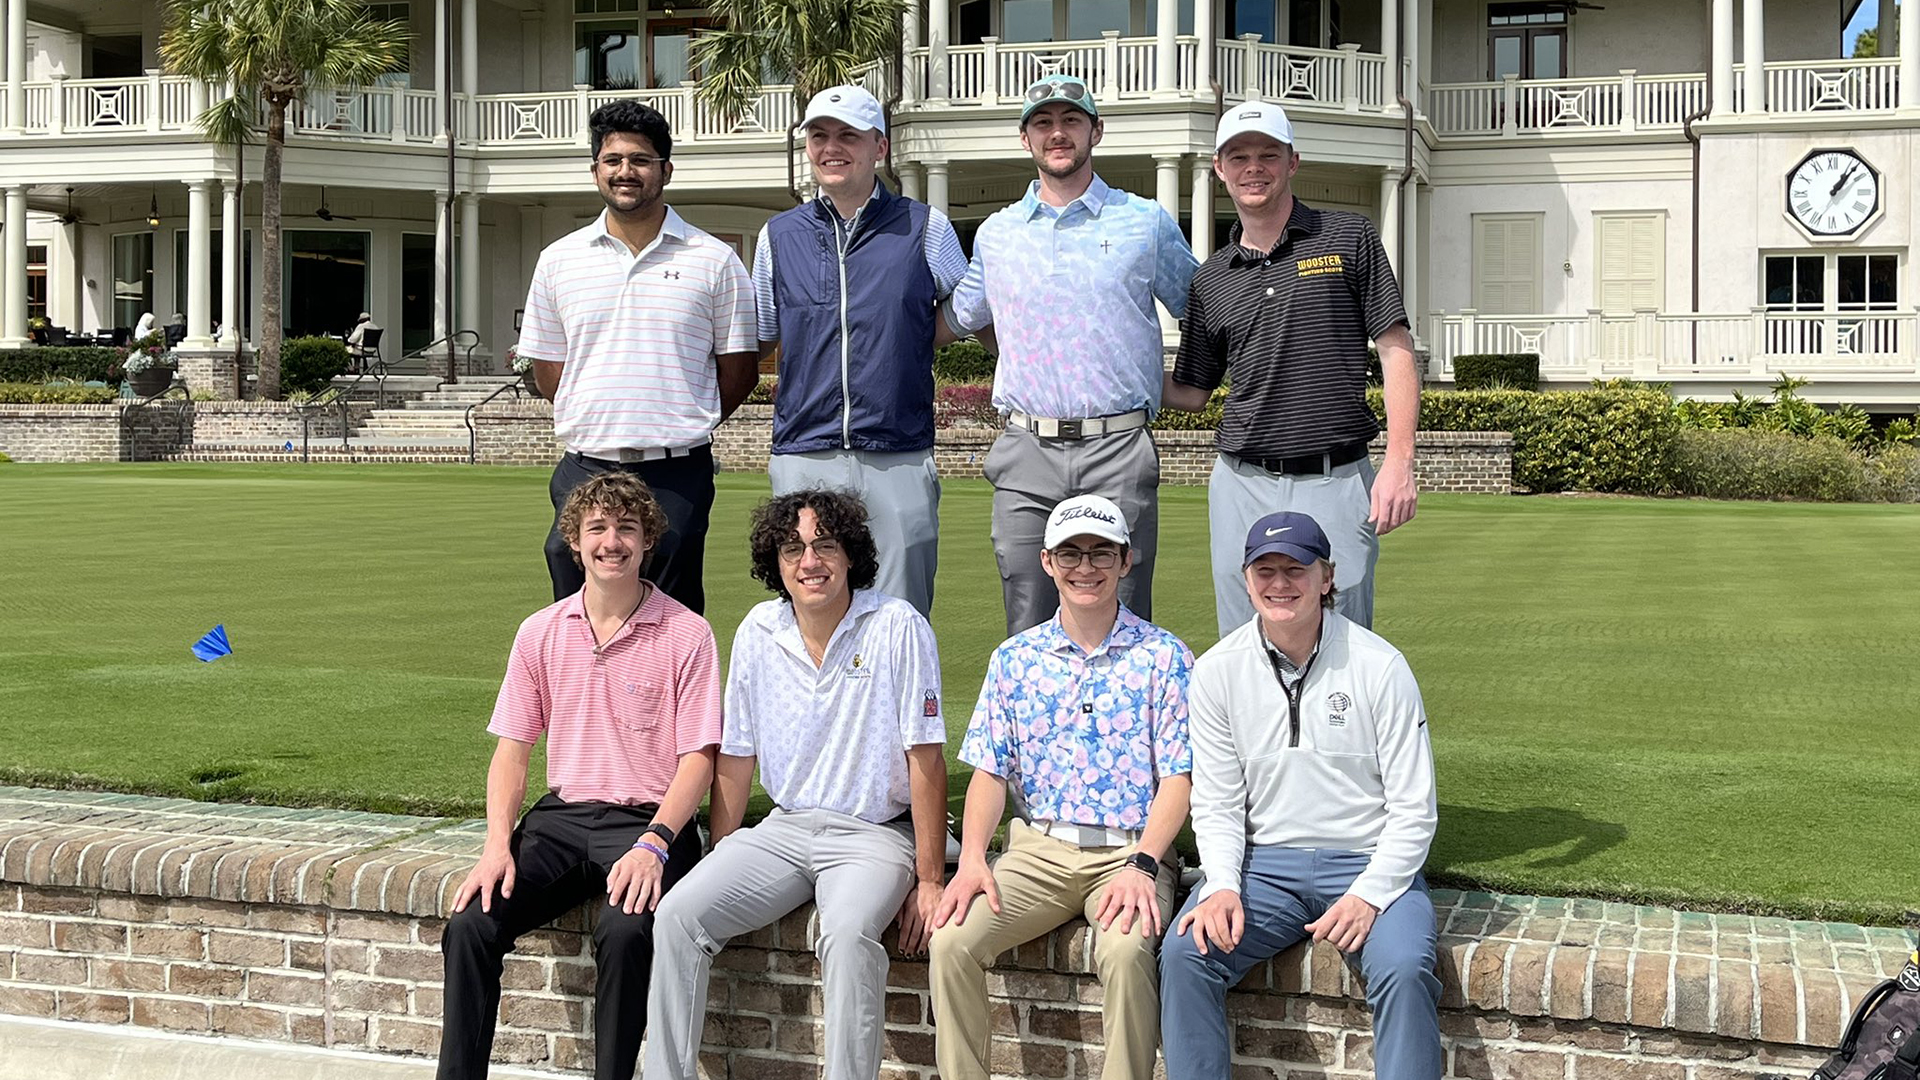 Wooster's Men's Golf Team